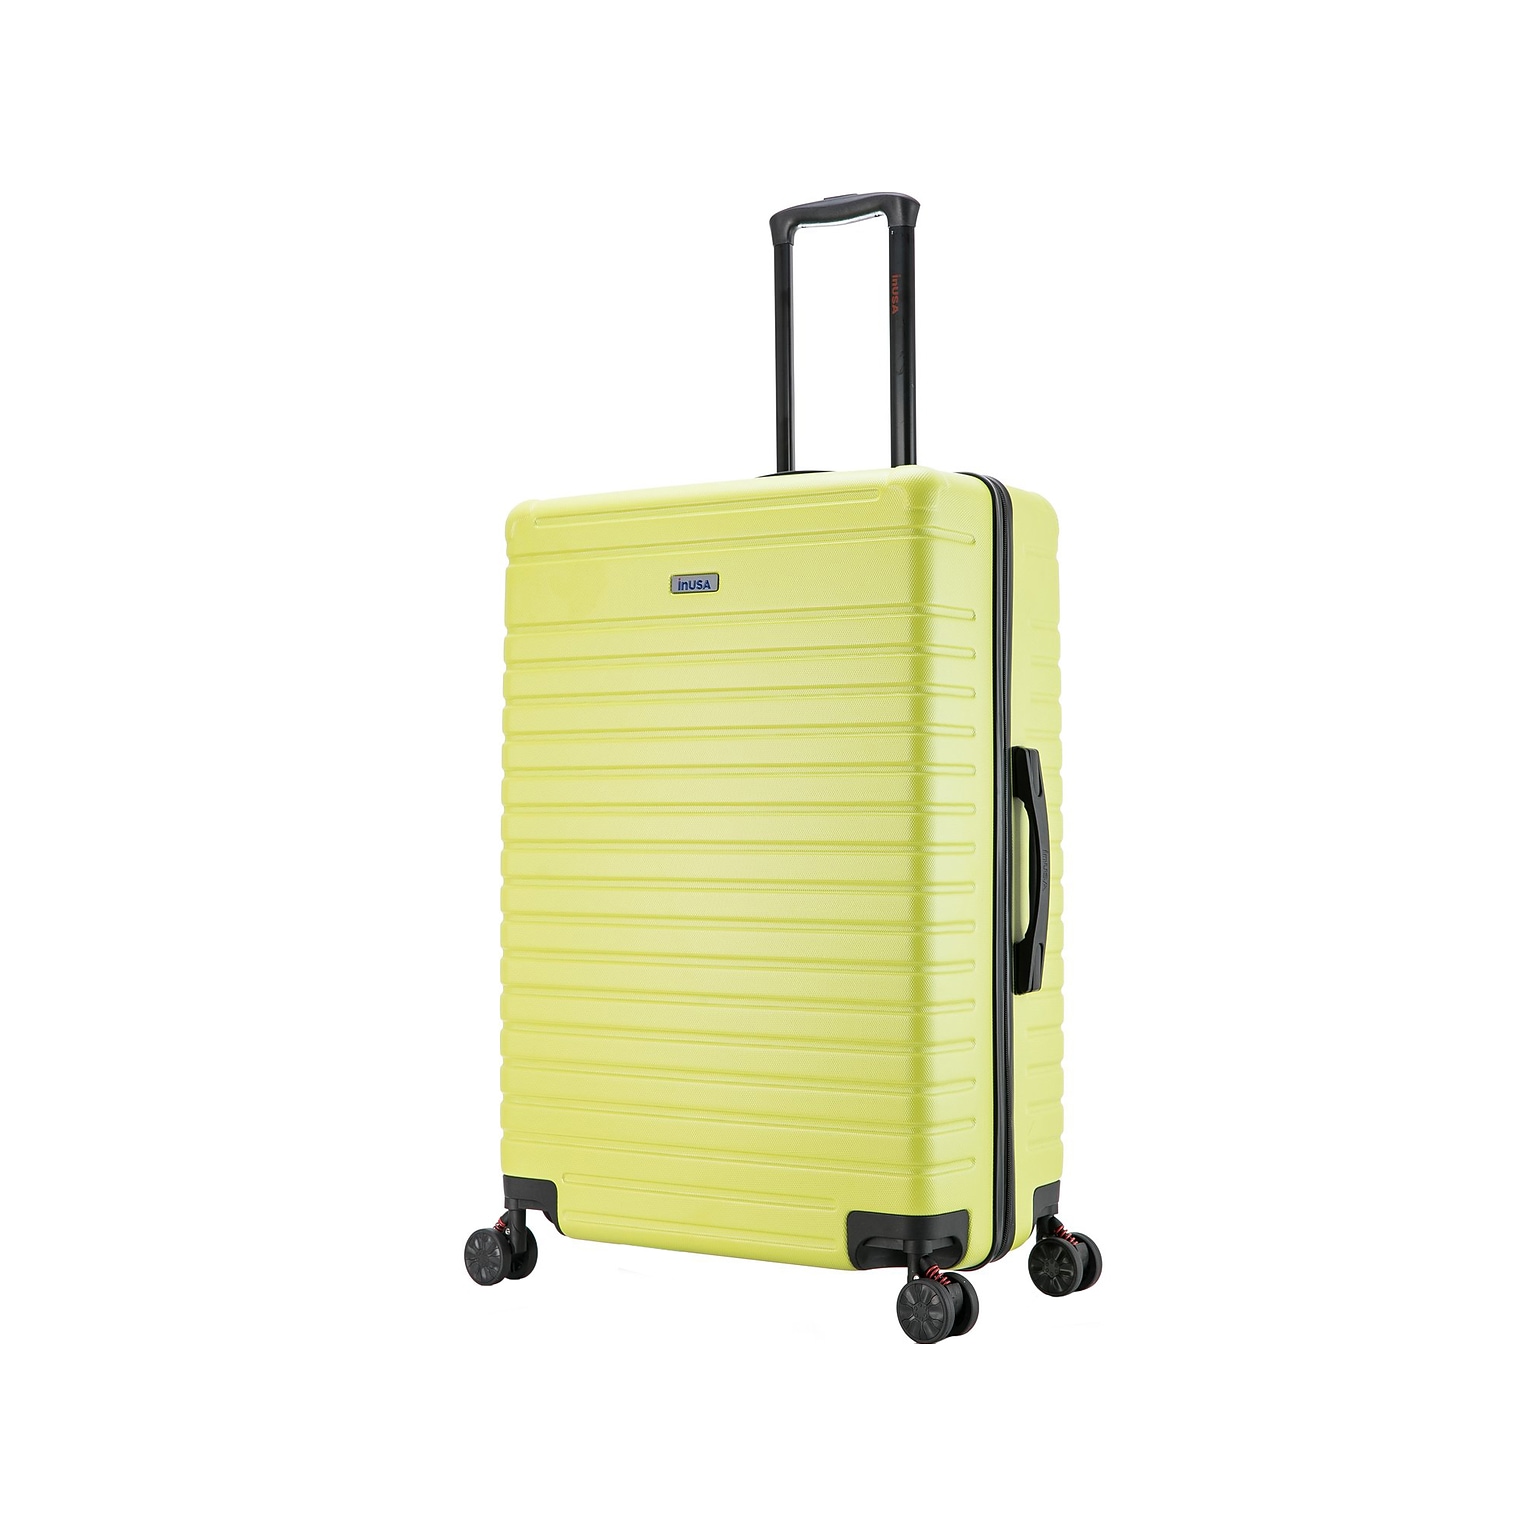 InUSA Deep Plastic 4-Wheel Spinner Luggage, Green (IUDEE00L-GRN)